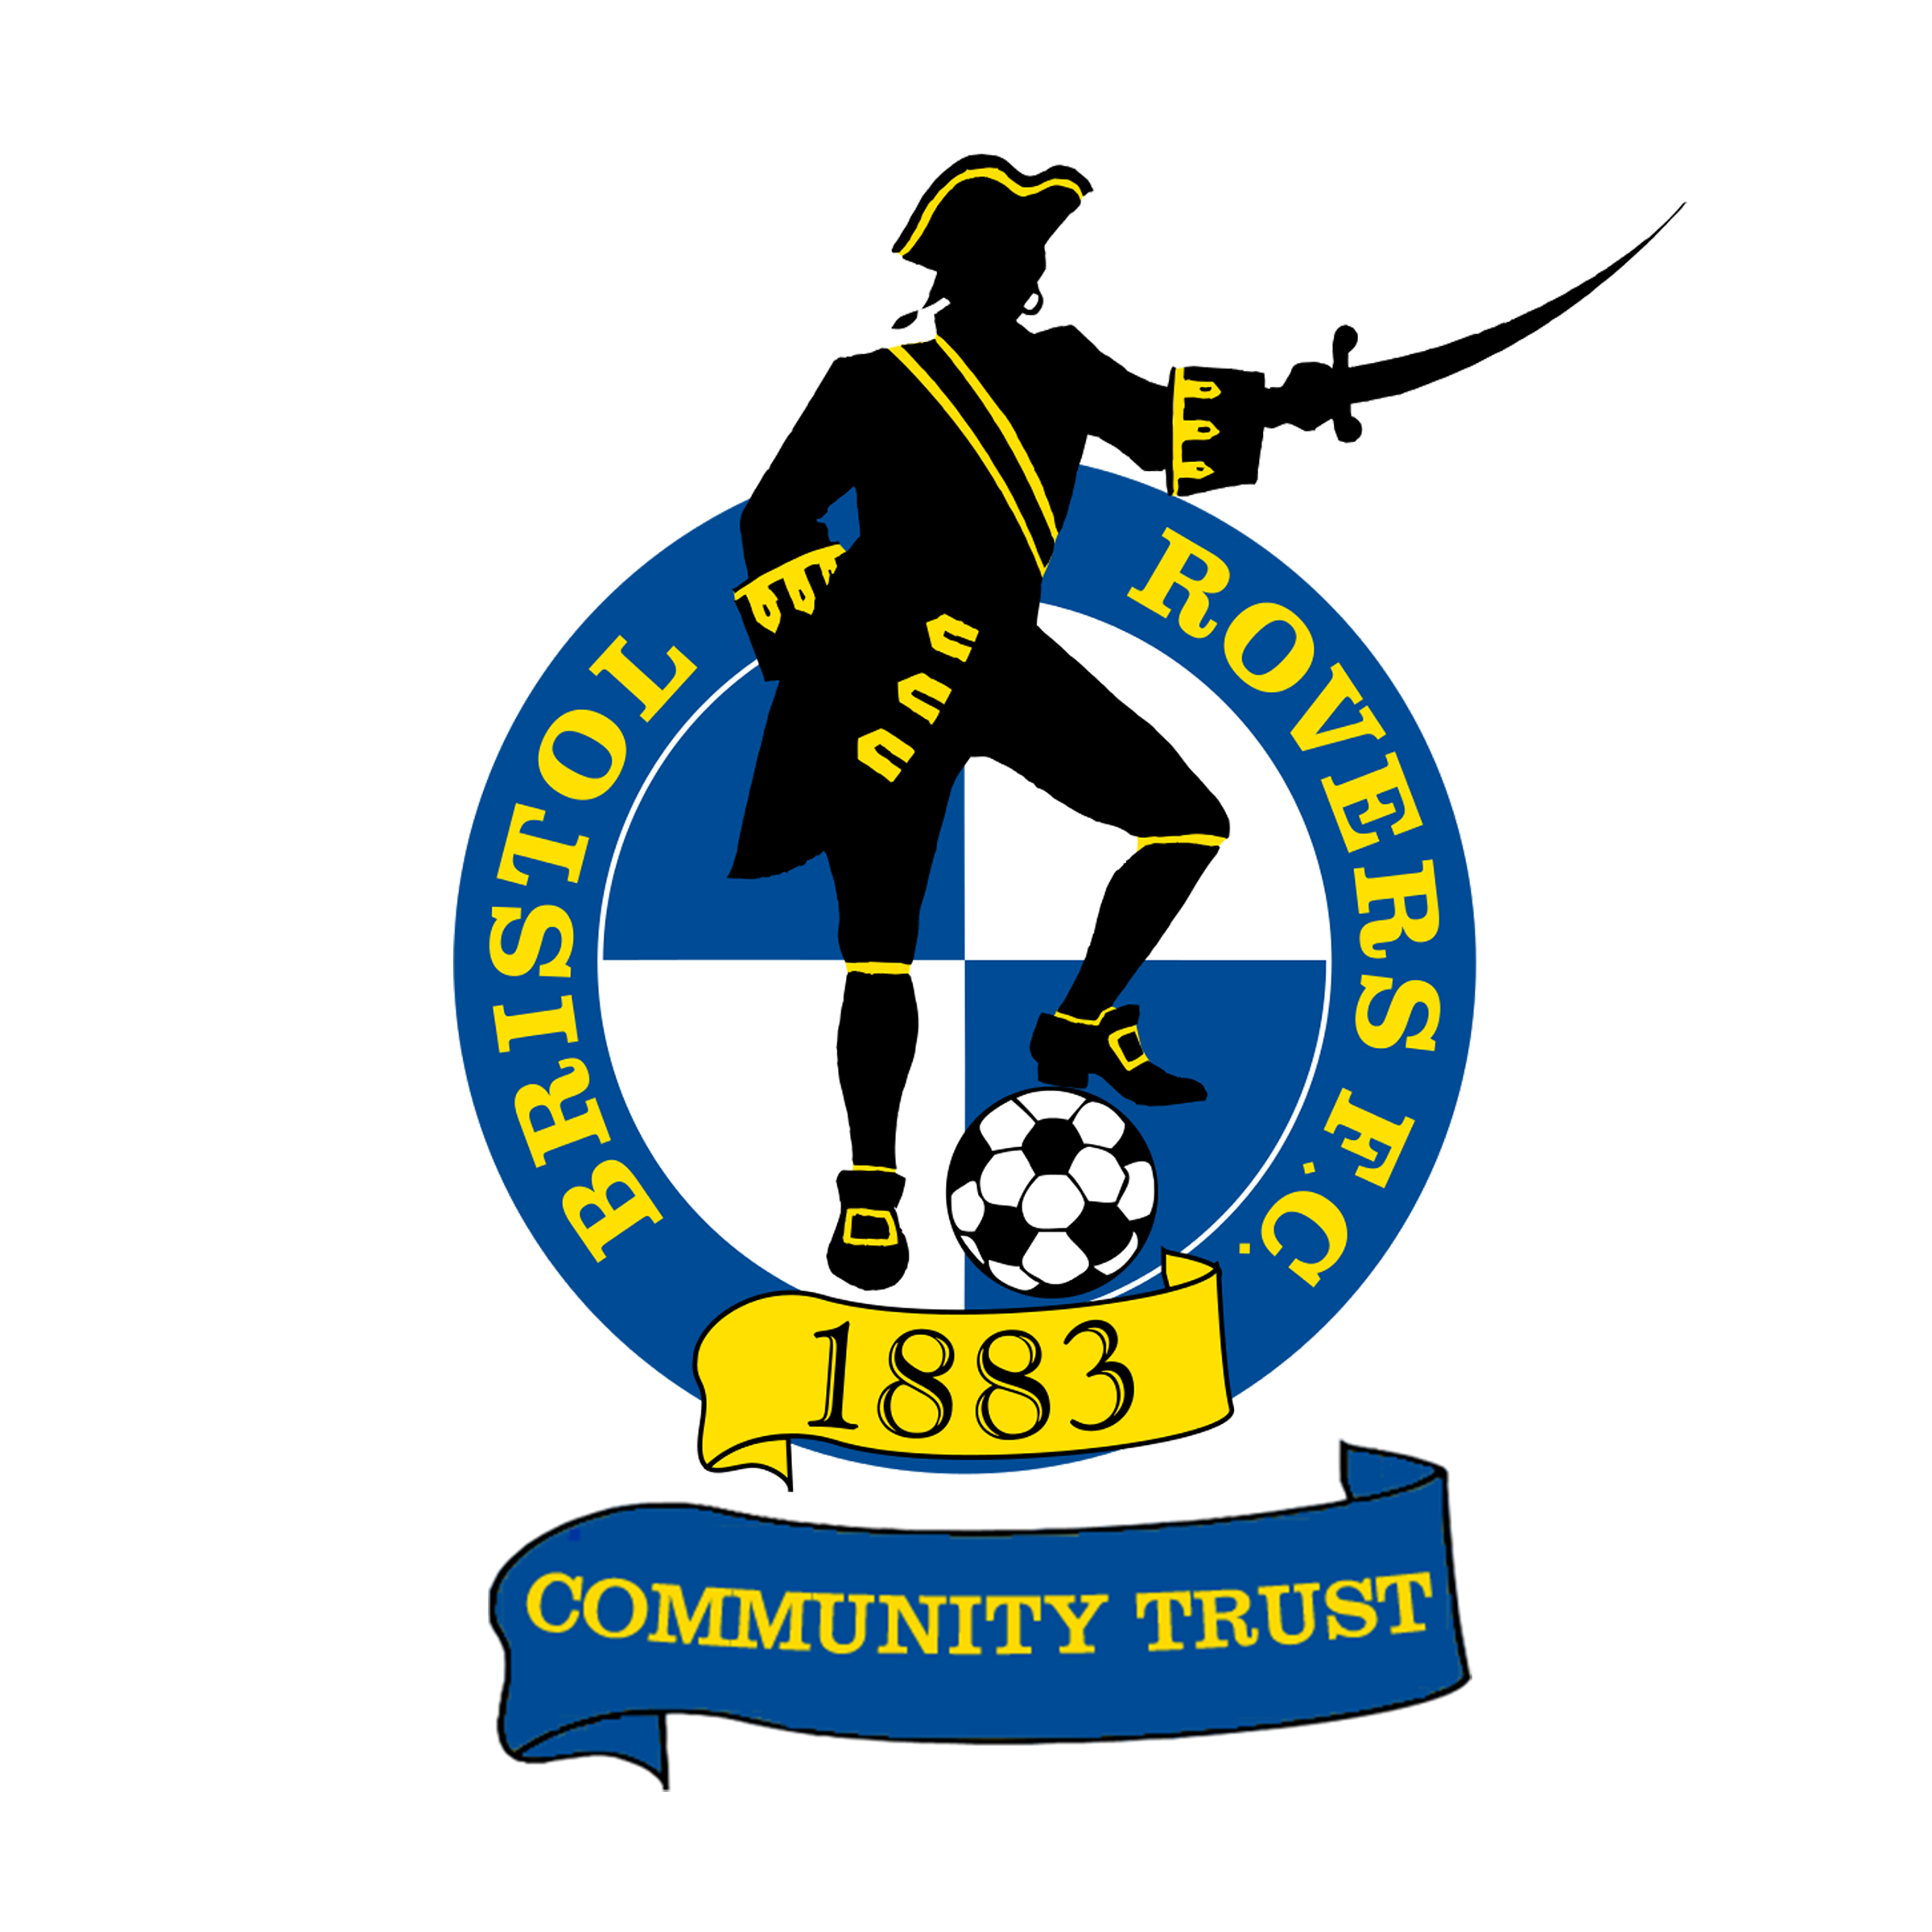 Bristol Rovers Community trust